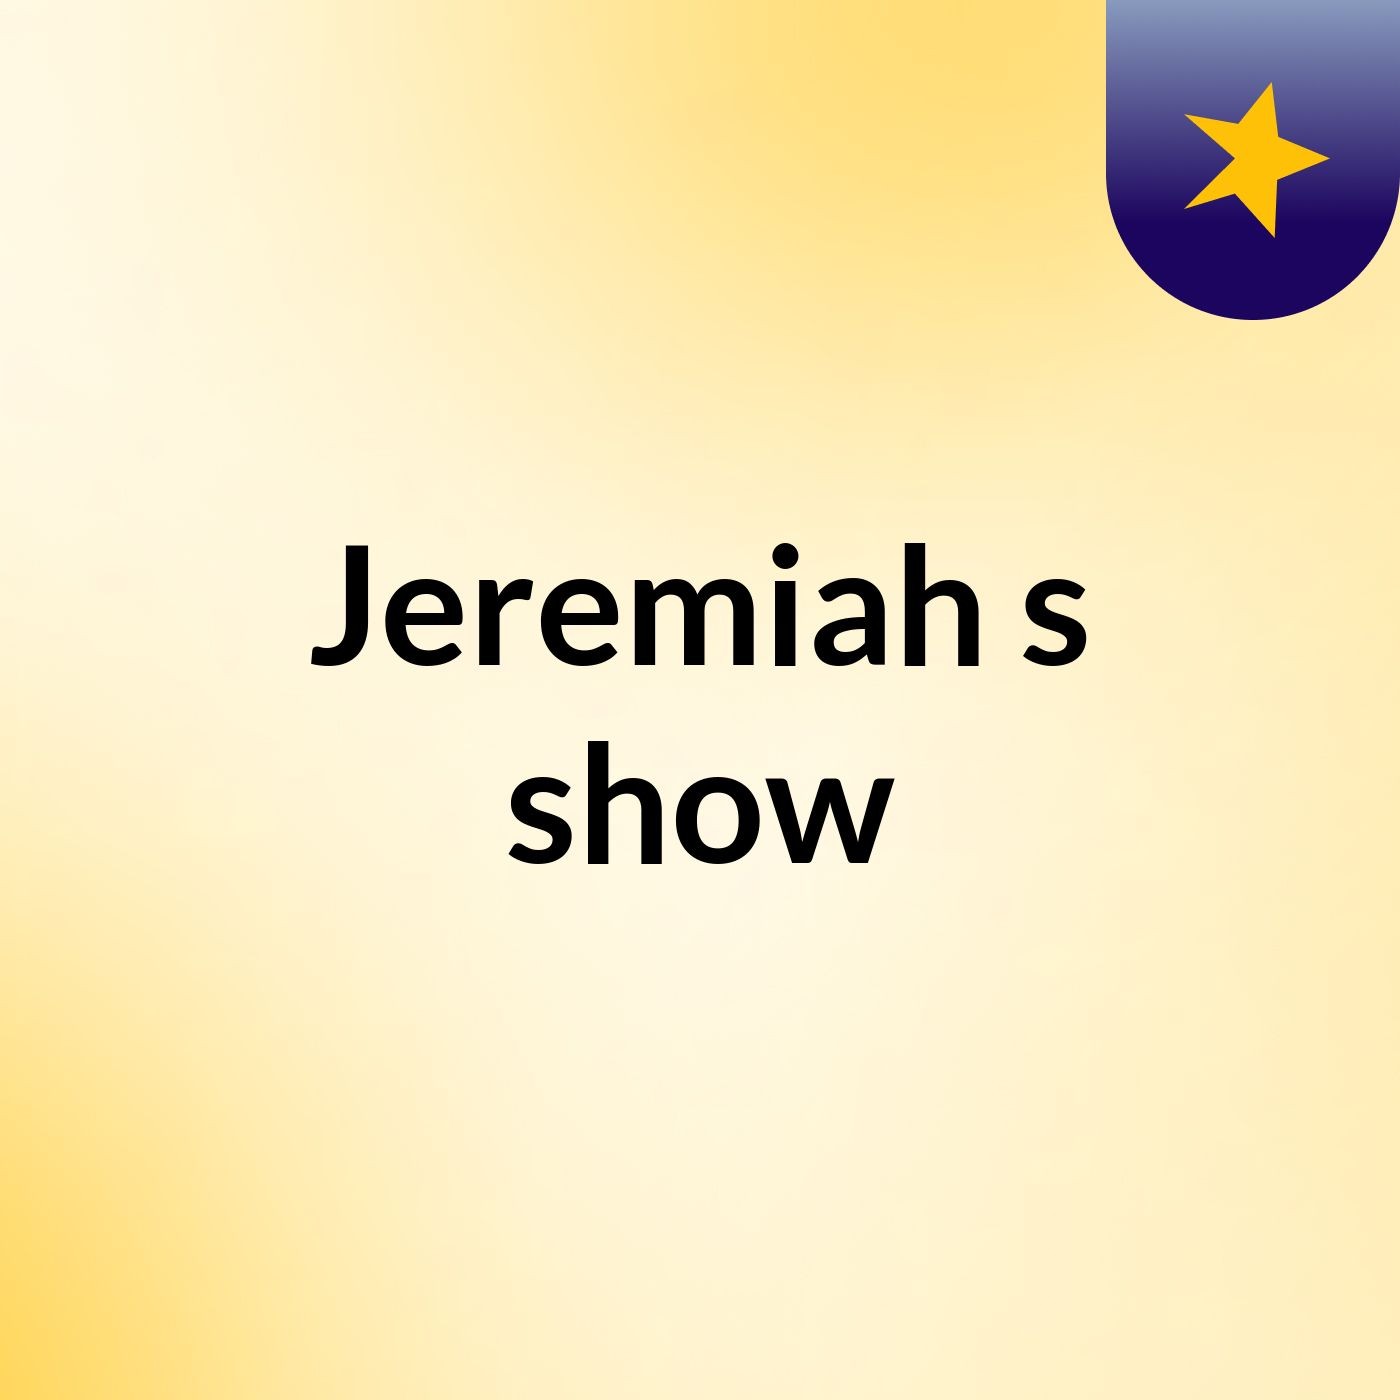 Jeremiah's show